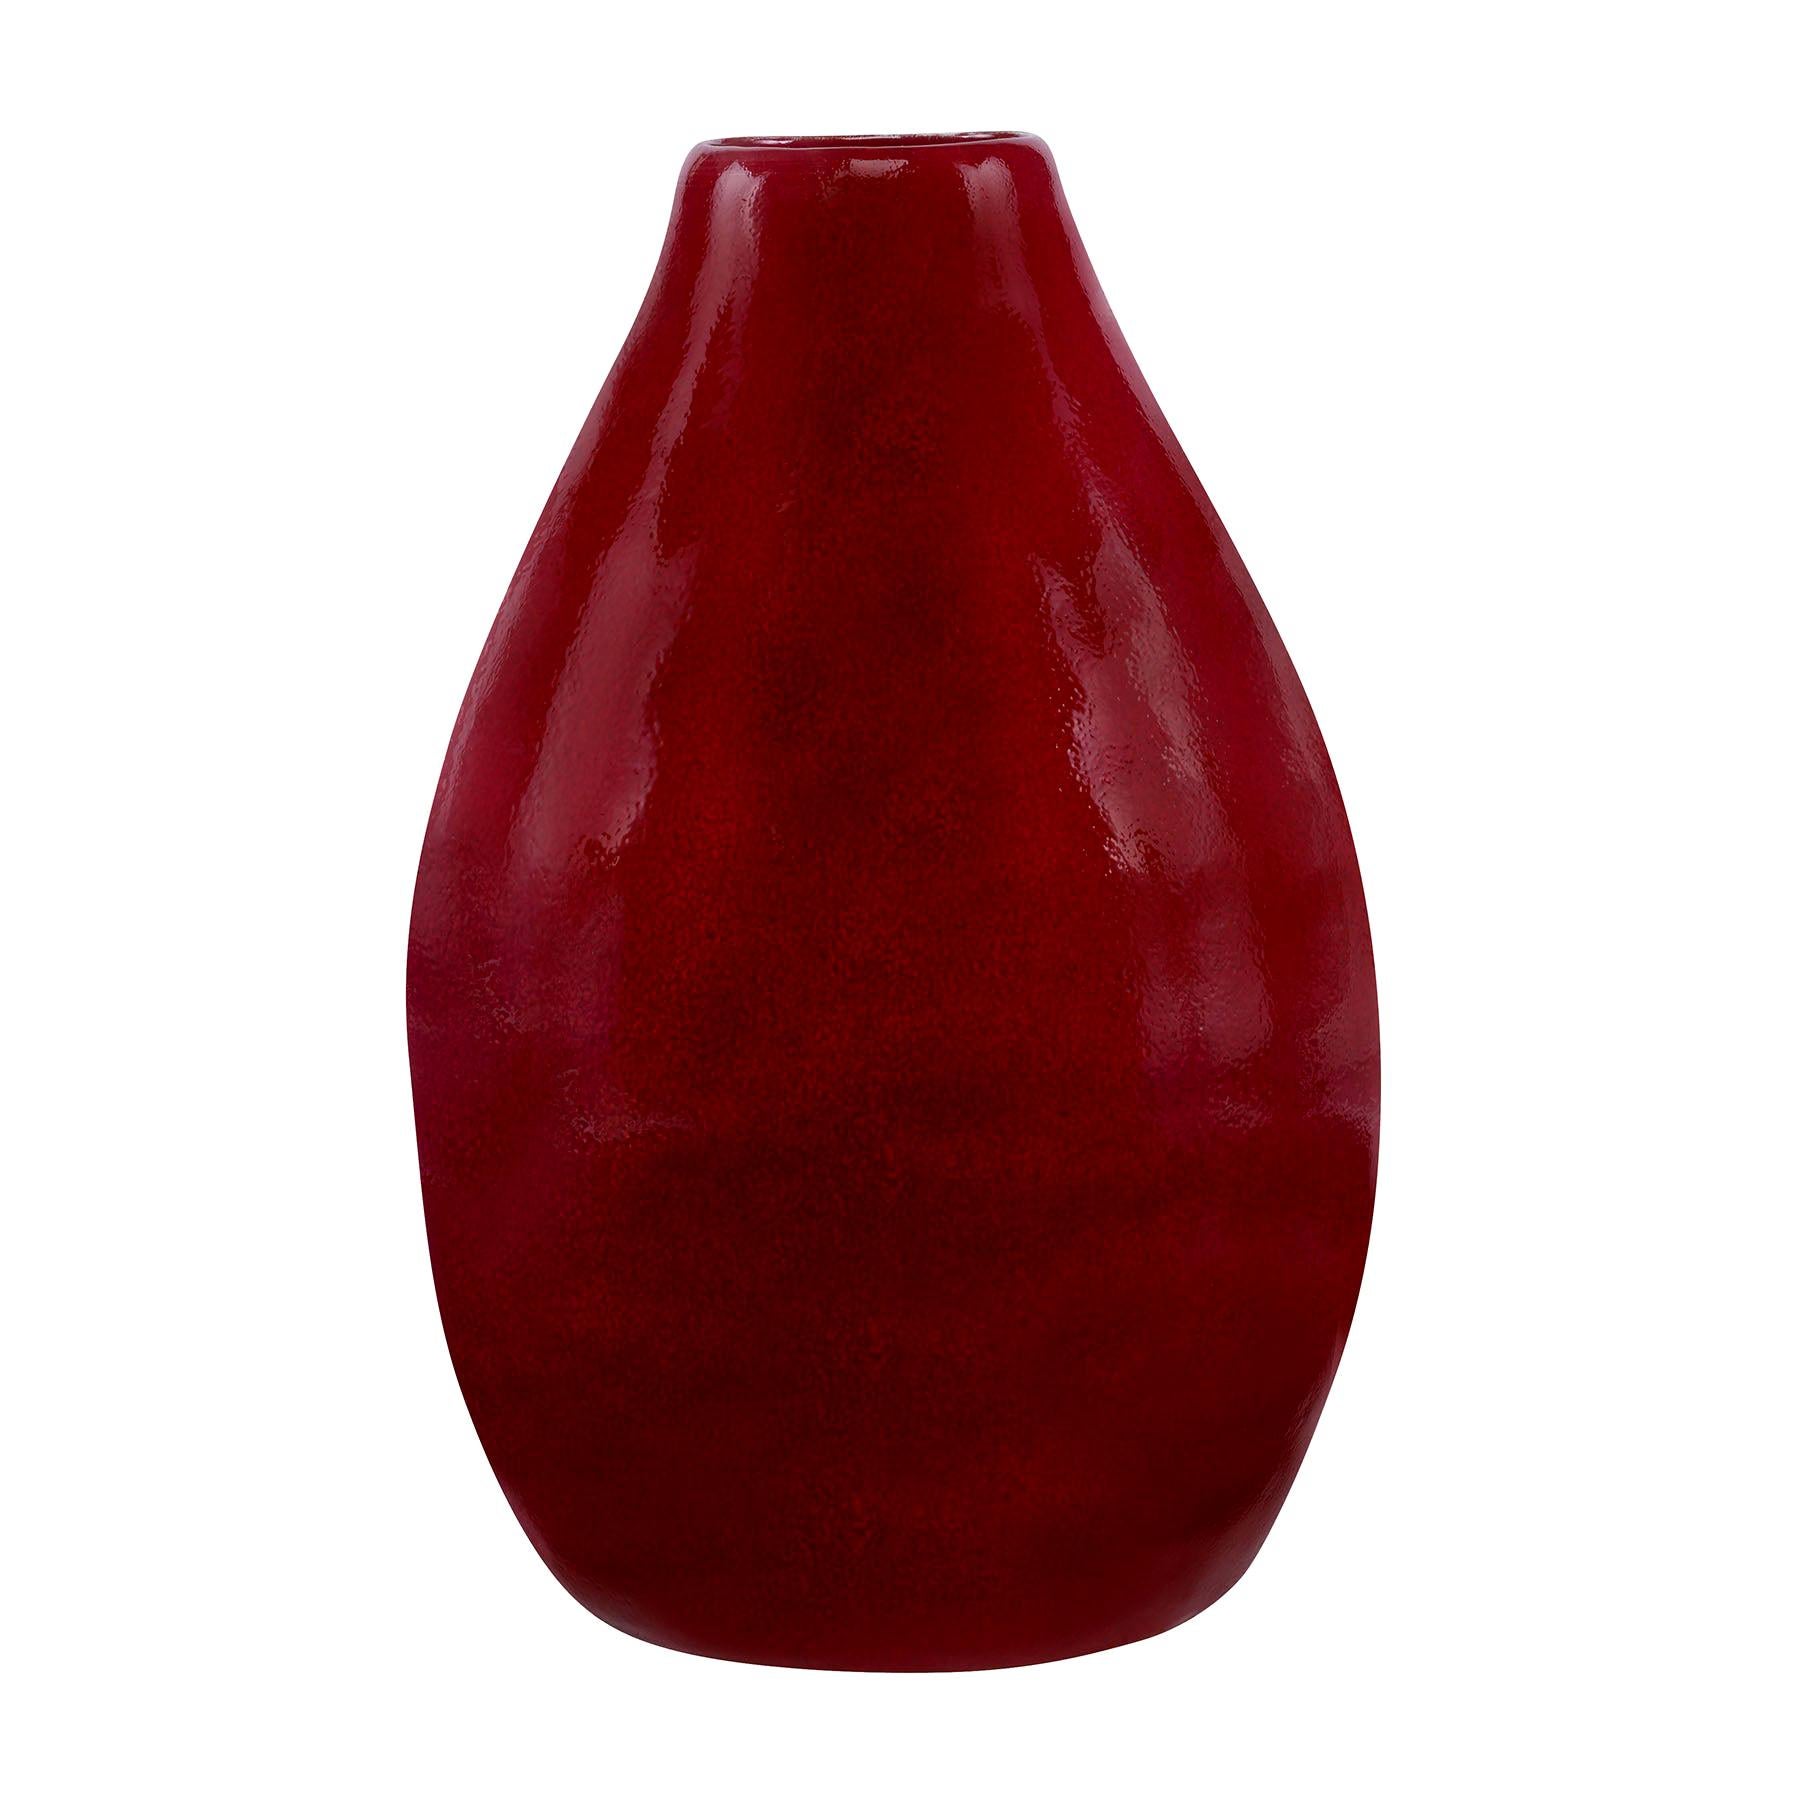 Stennis Vase in Red Ceramic by CuratedKravet